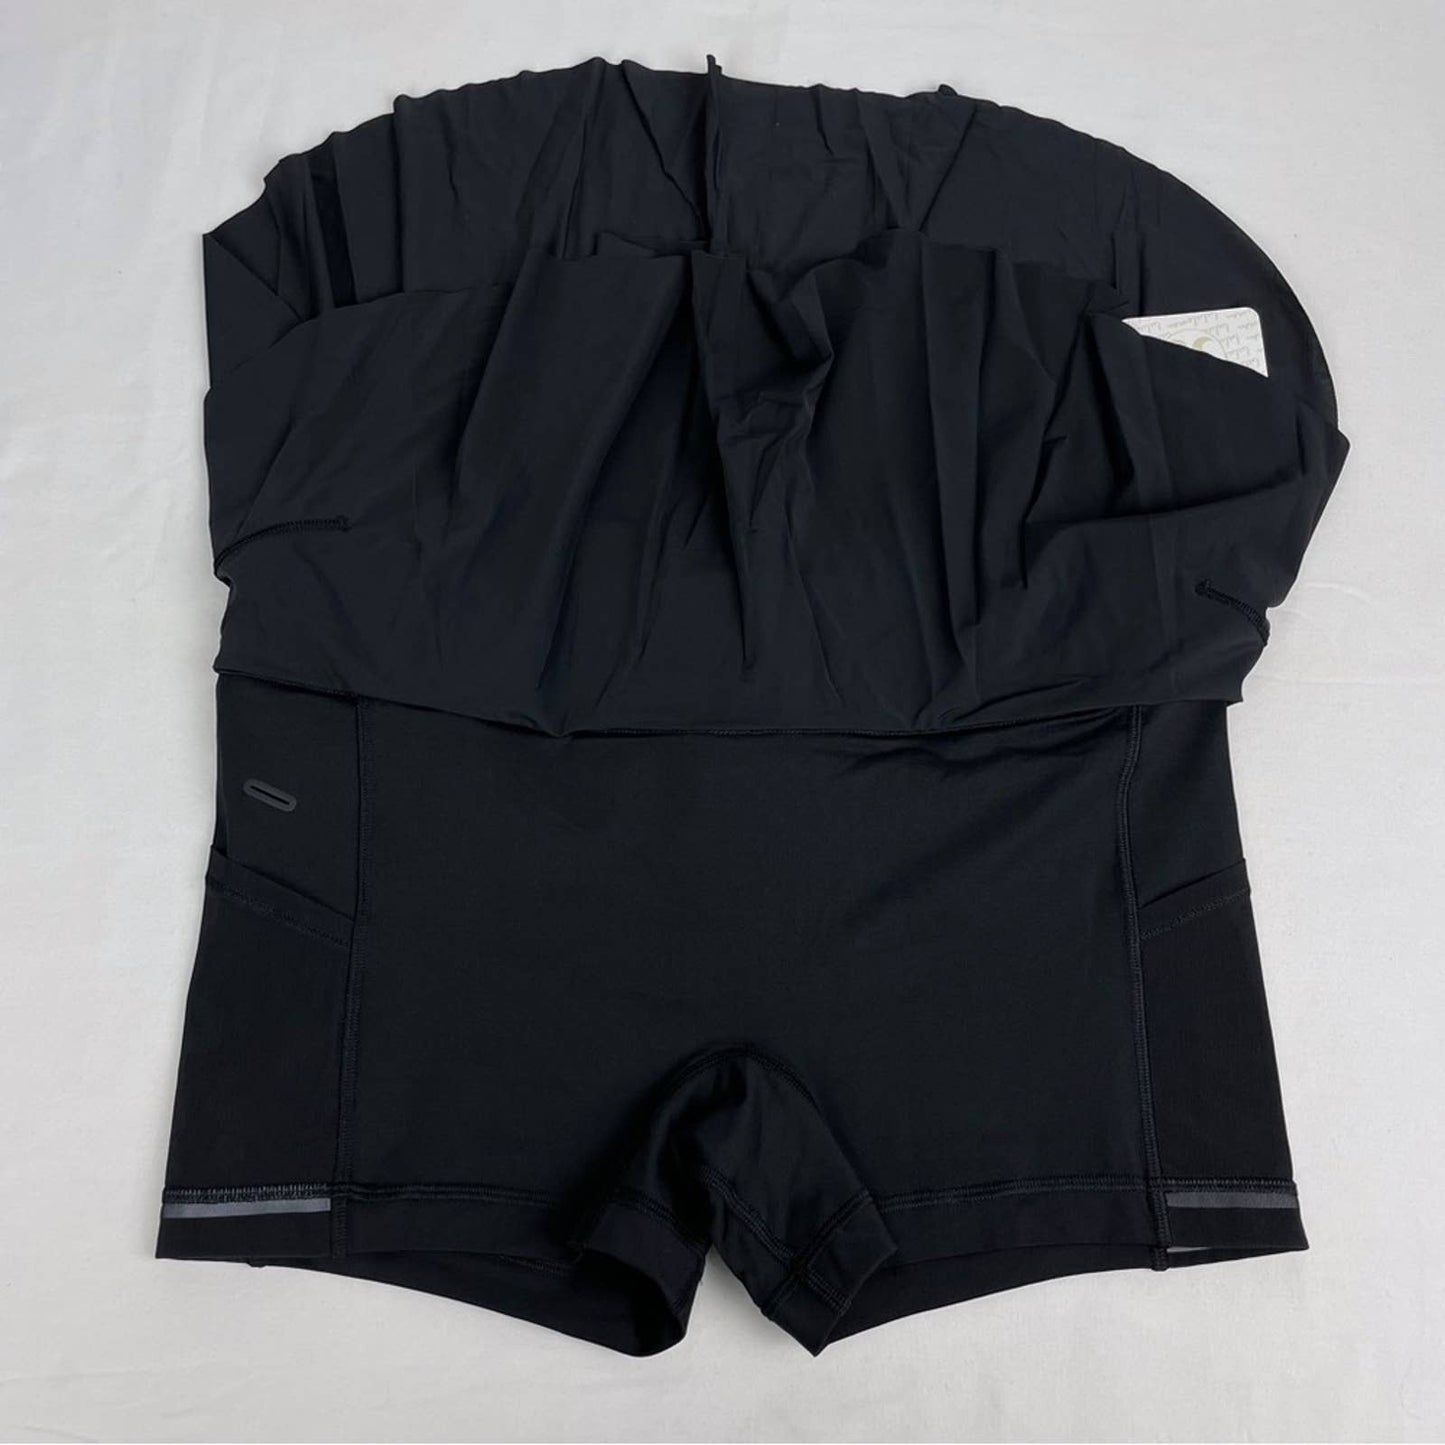 NEW Lululemon Quick Pace Black Lightweight Running Athletic Active Skirt Skort Size 10